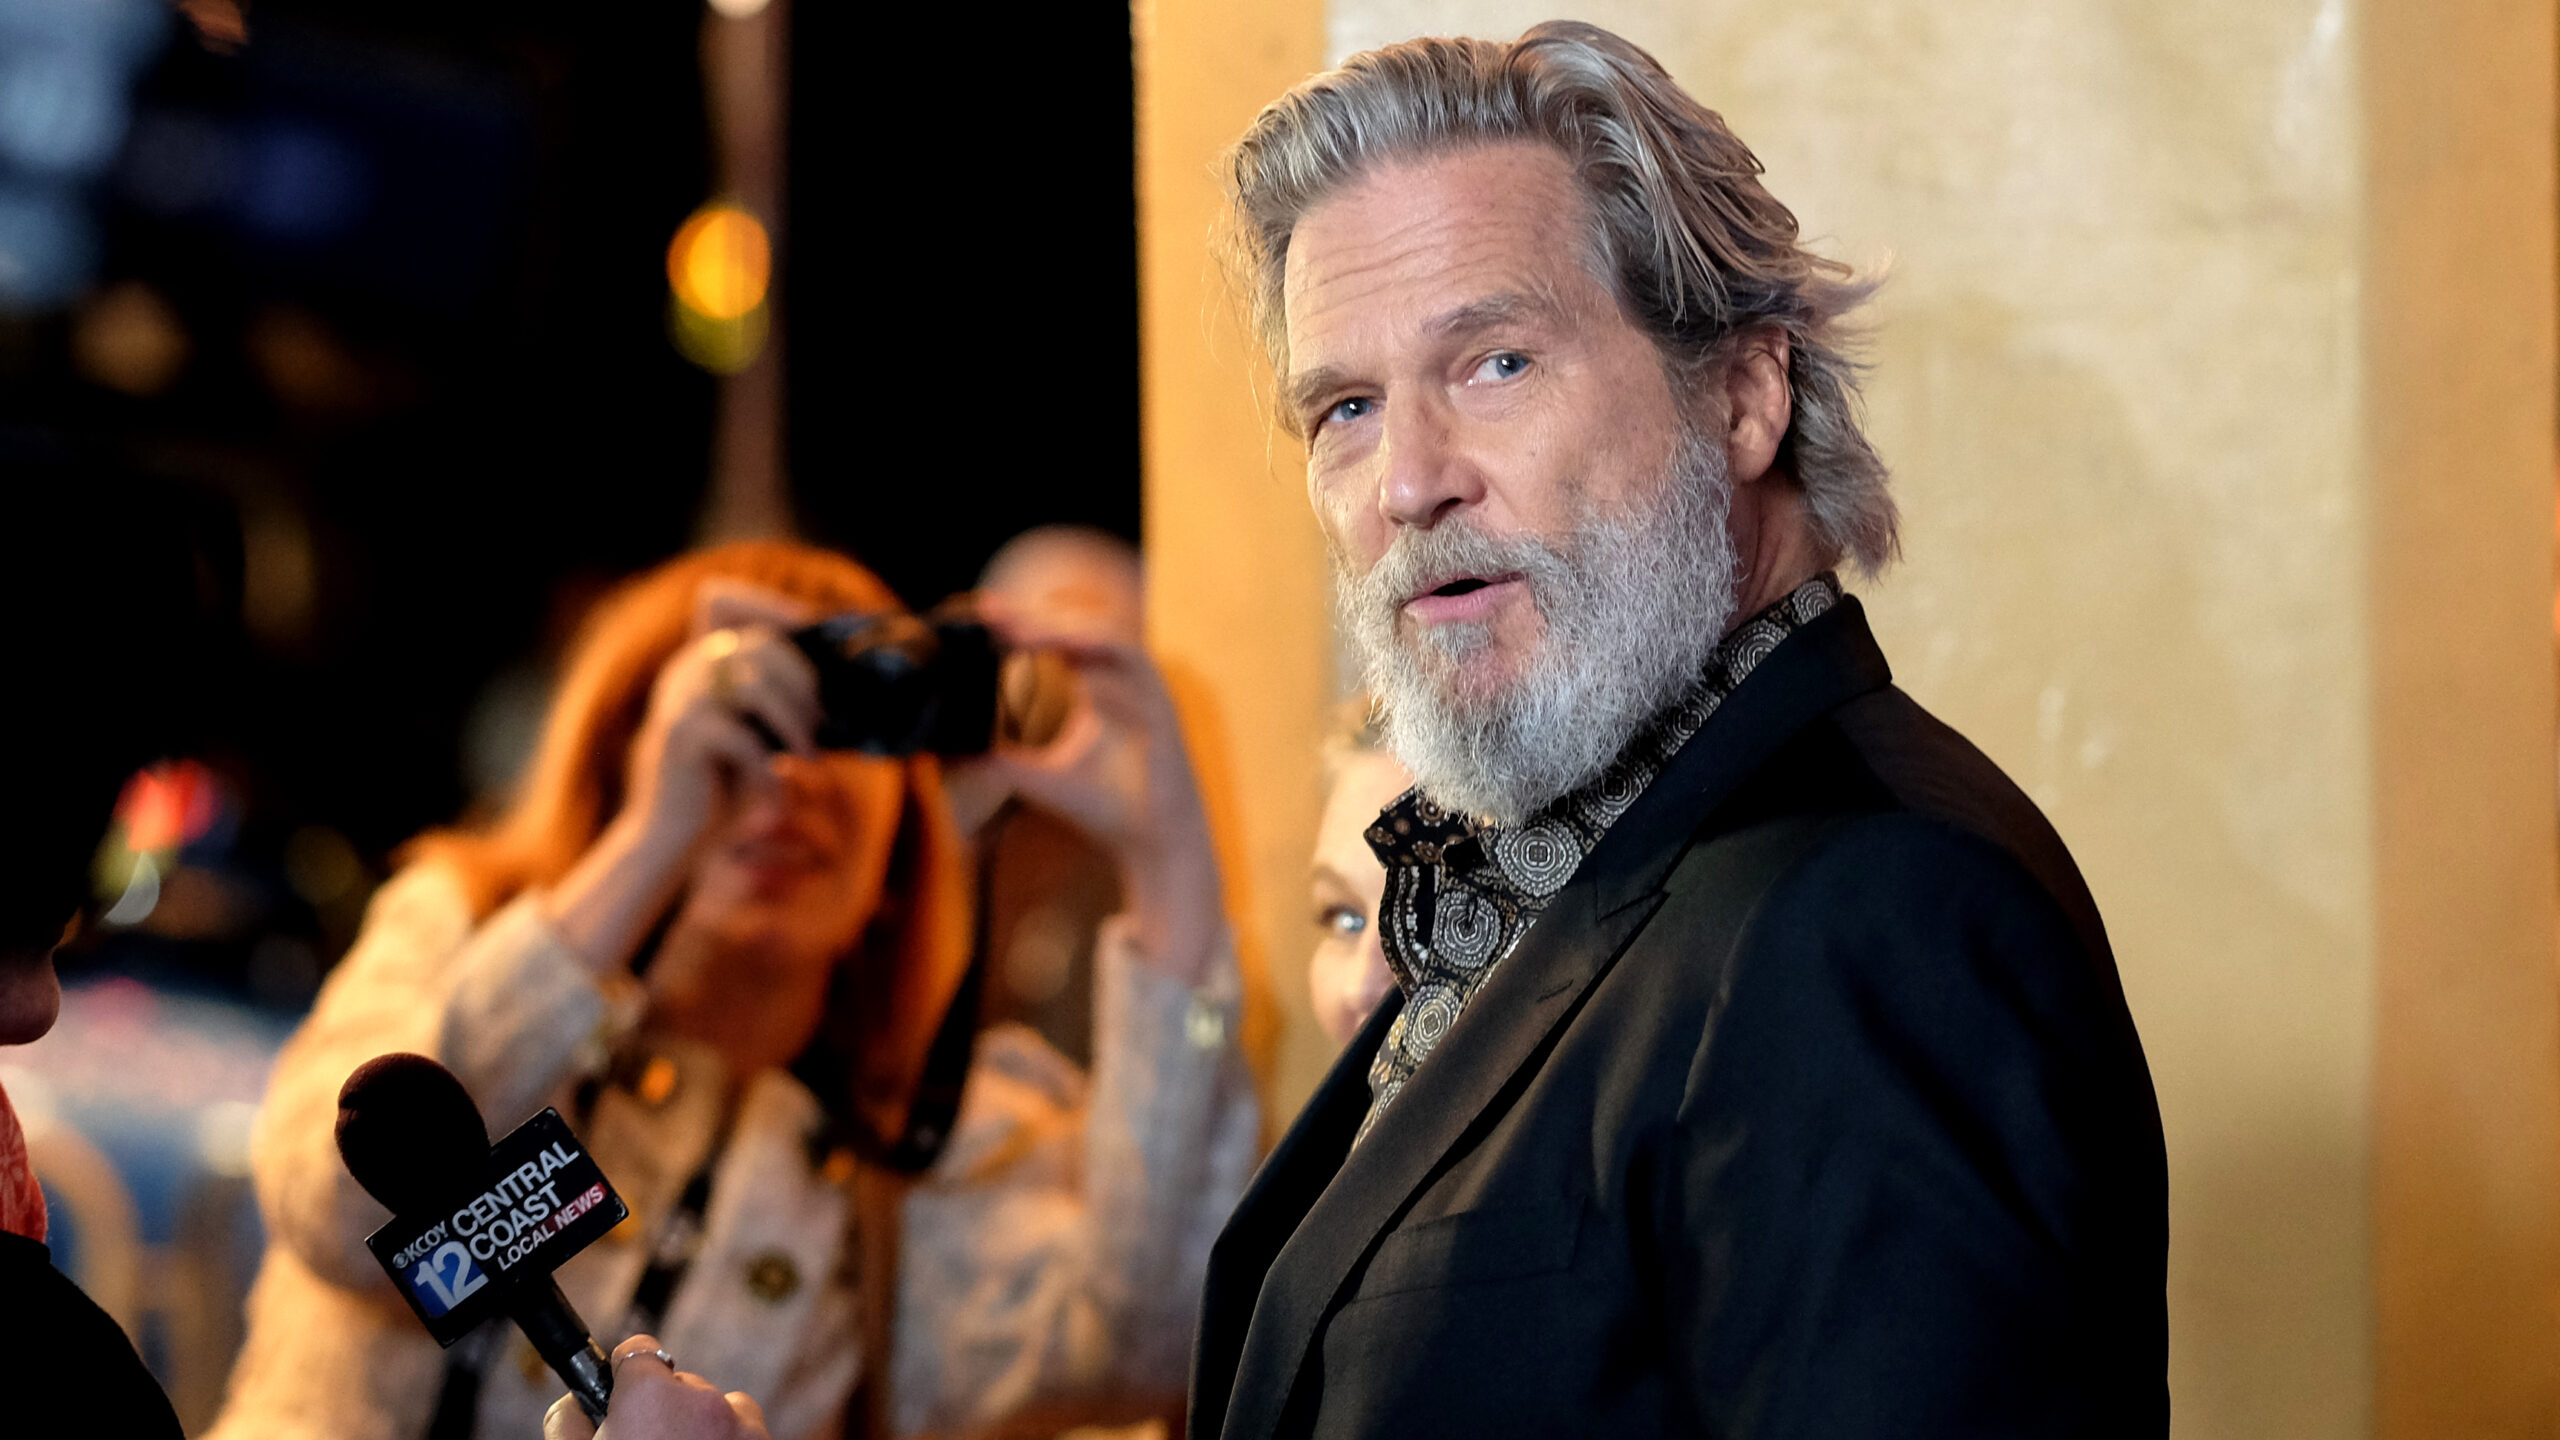 Jeff Bridges updates fans on cancer battle: “Didn’t think I’d work again.”